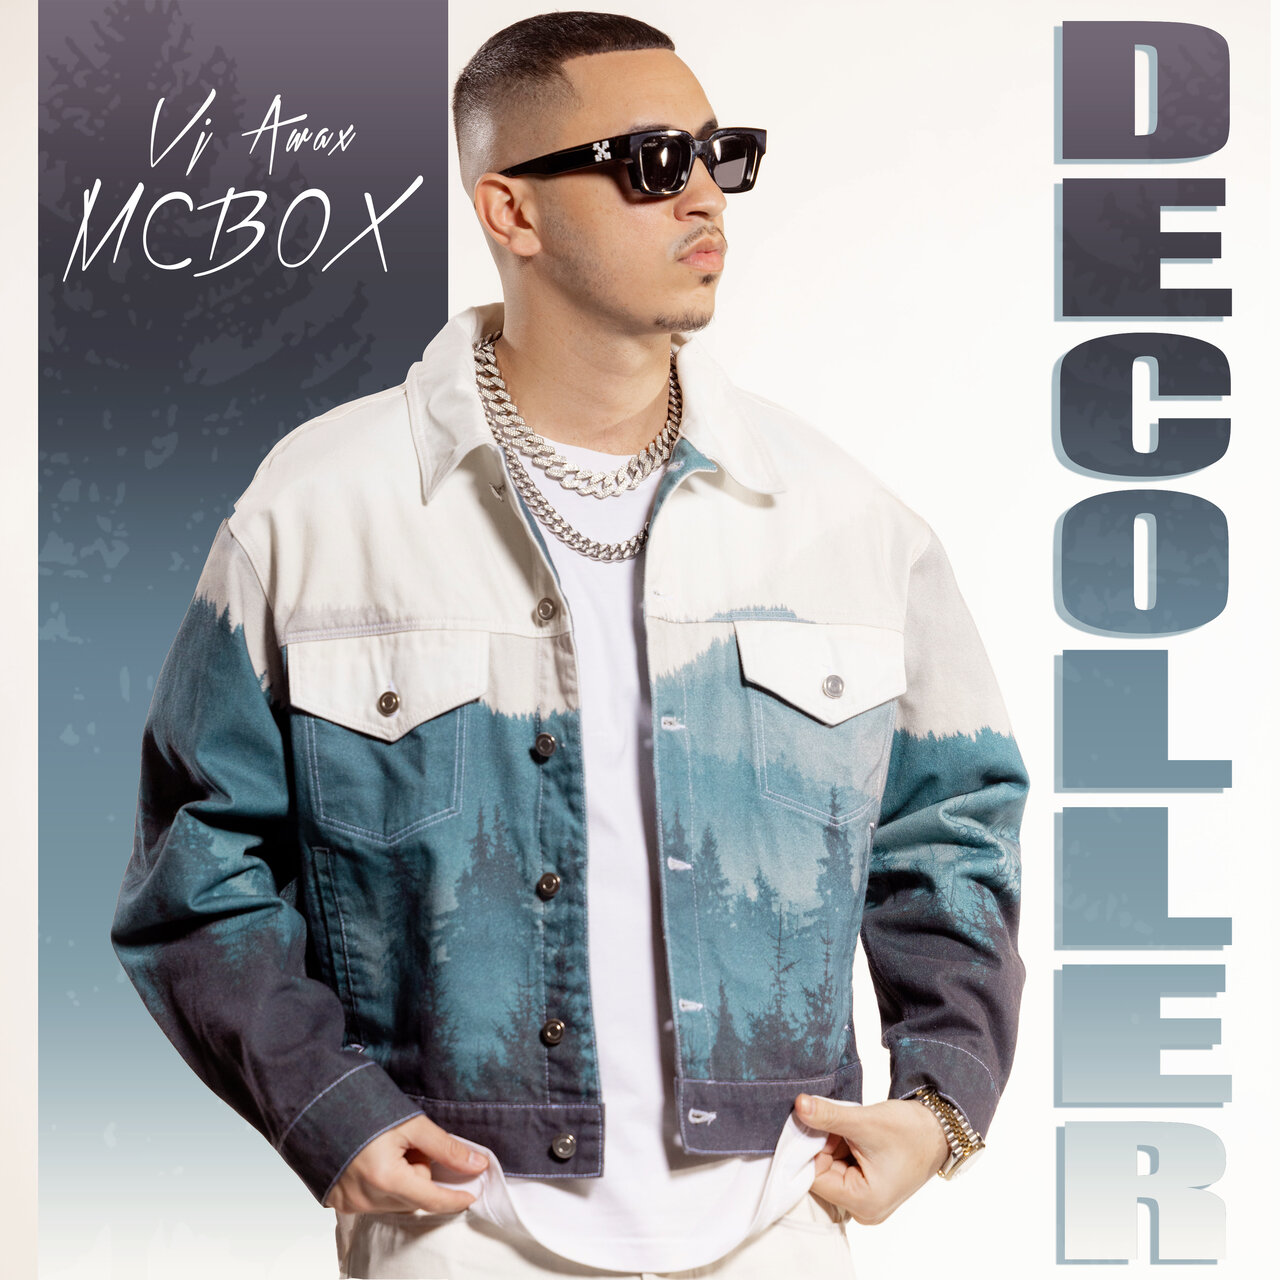 VJ Awax and MCBox - Décoller (Cover)